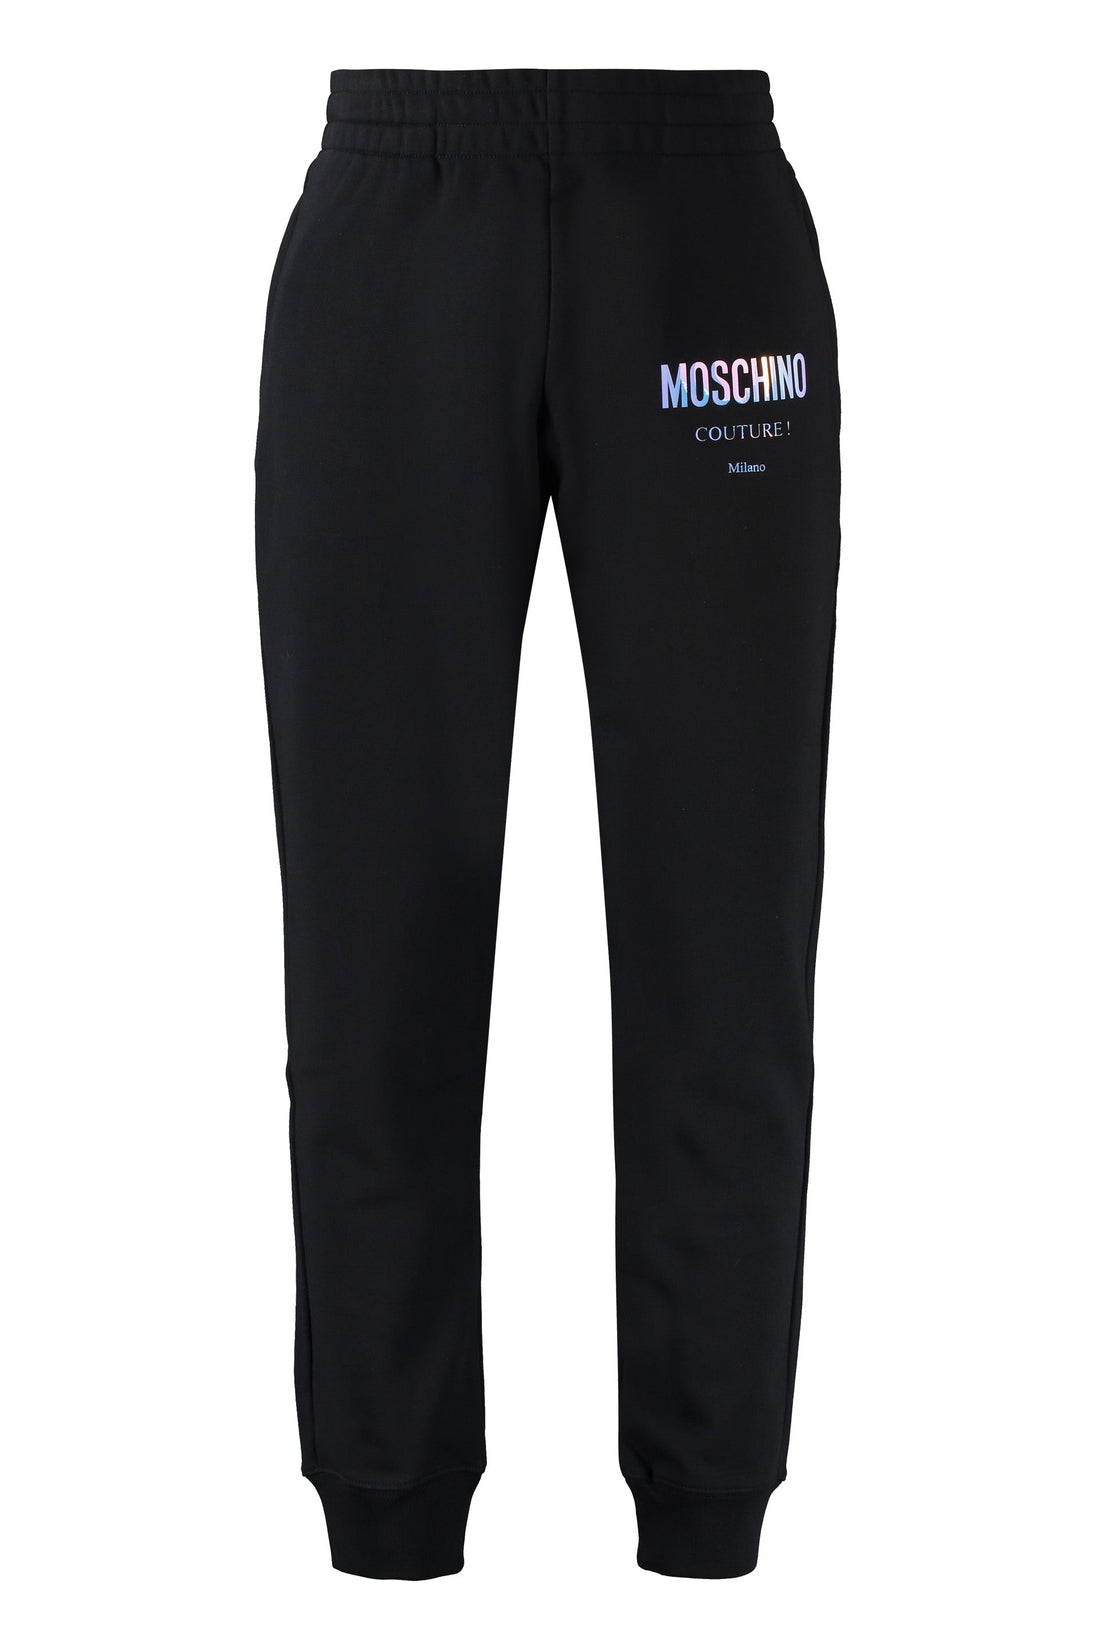 Moschino-OUTLET-SALE-Logo print sweatpants-ARCHIVIST